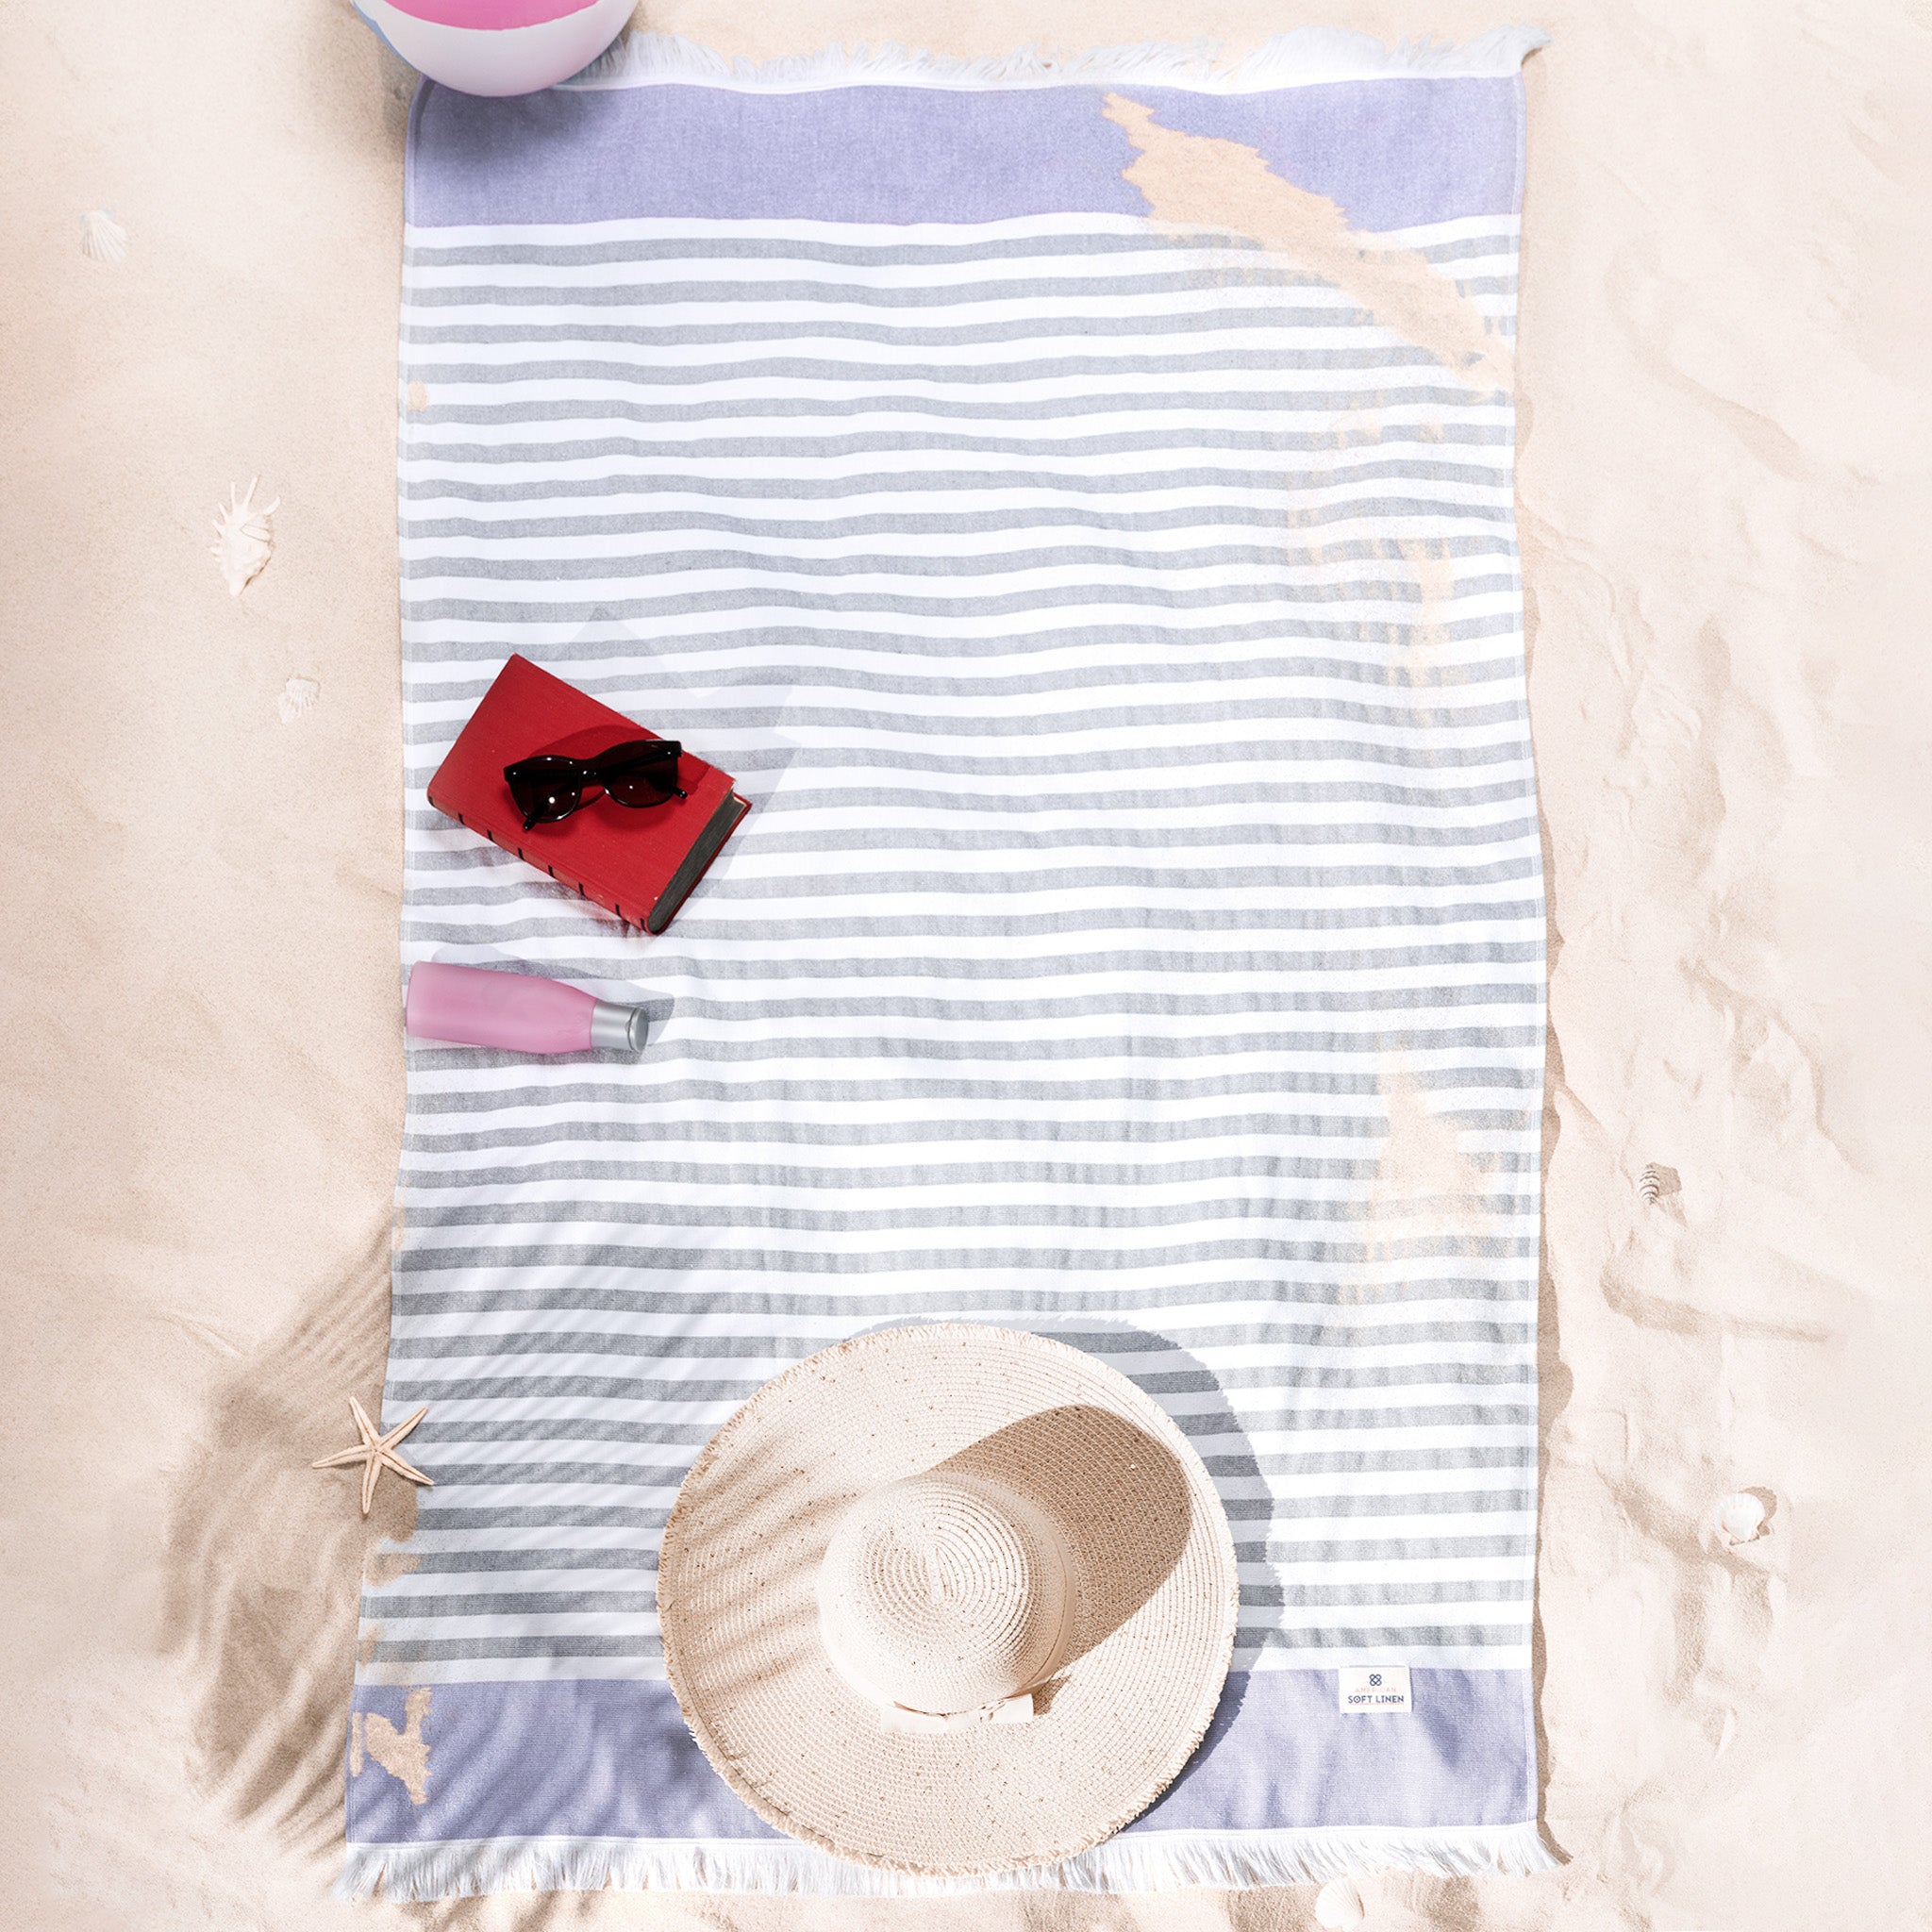 4 Packed 100% Cotton Terry Peshtemal & Beach Towel Purple-06